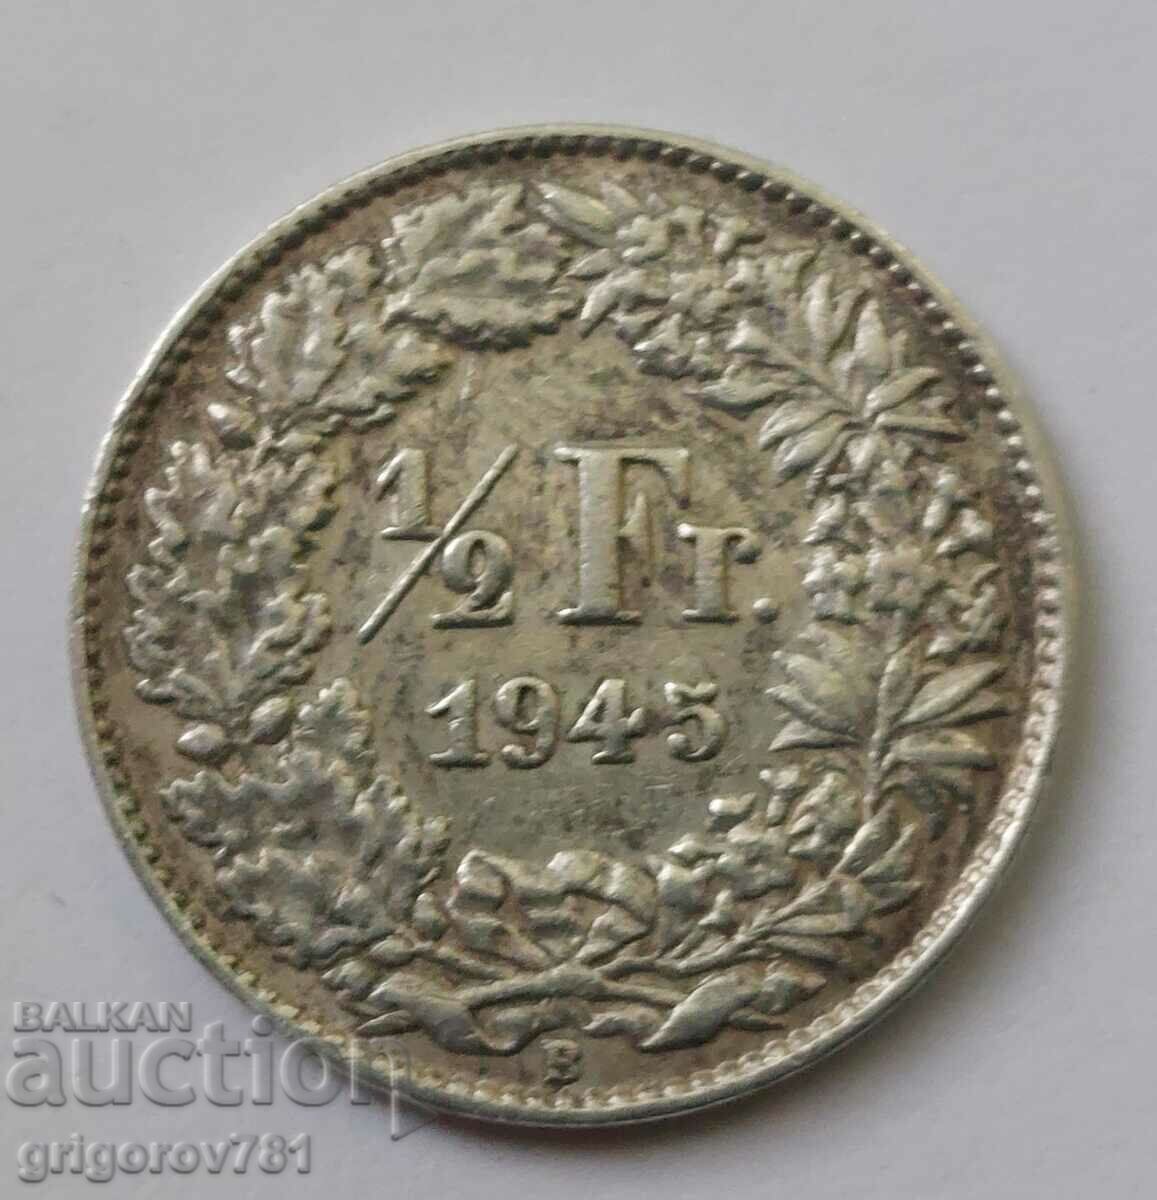 1/2 franc silver Switzerland 1945 B - silver coin